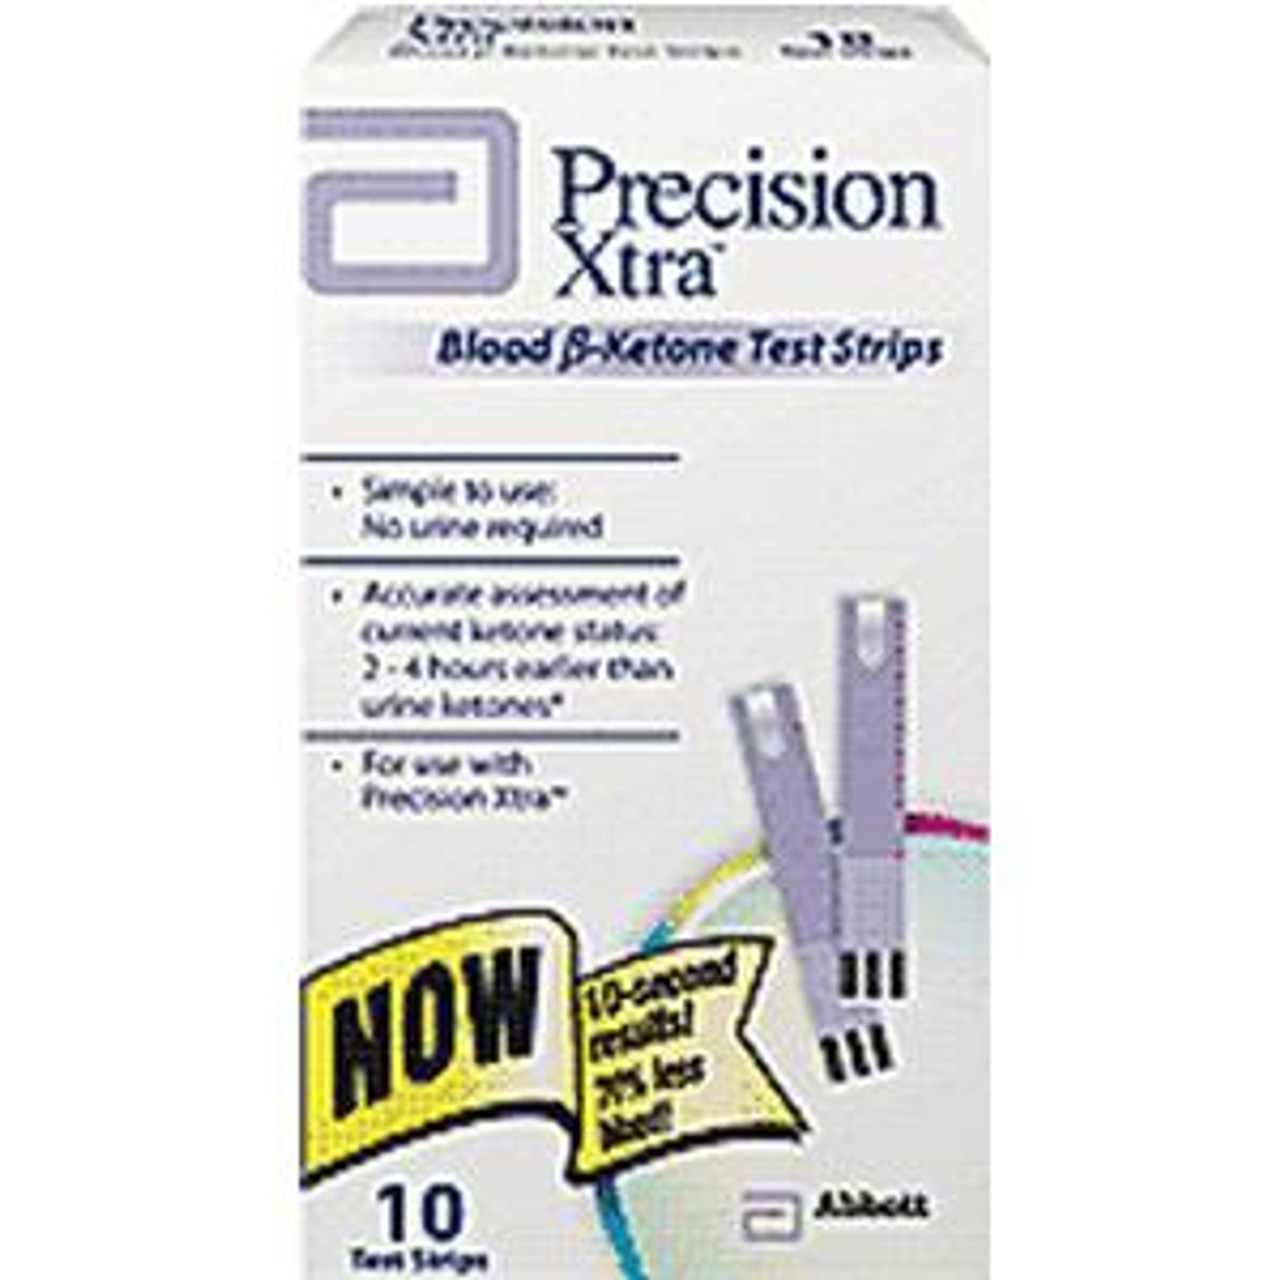 Precision Xtra Test Strips 100